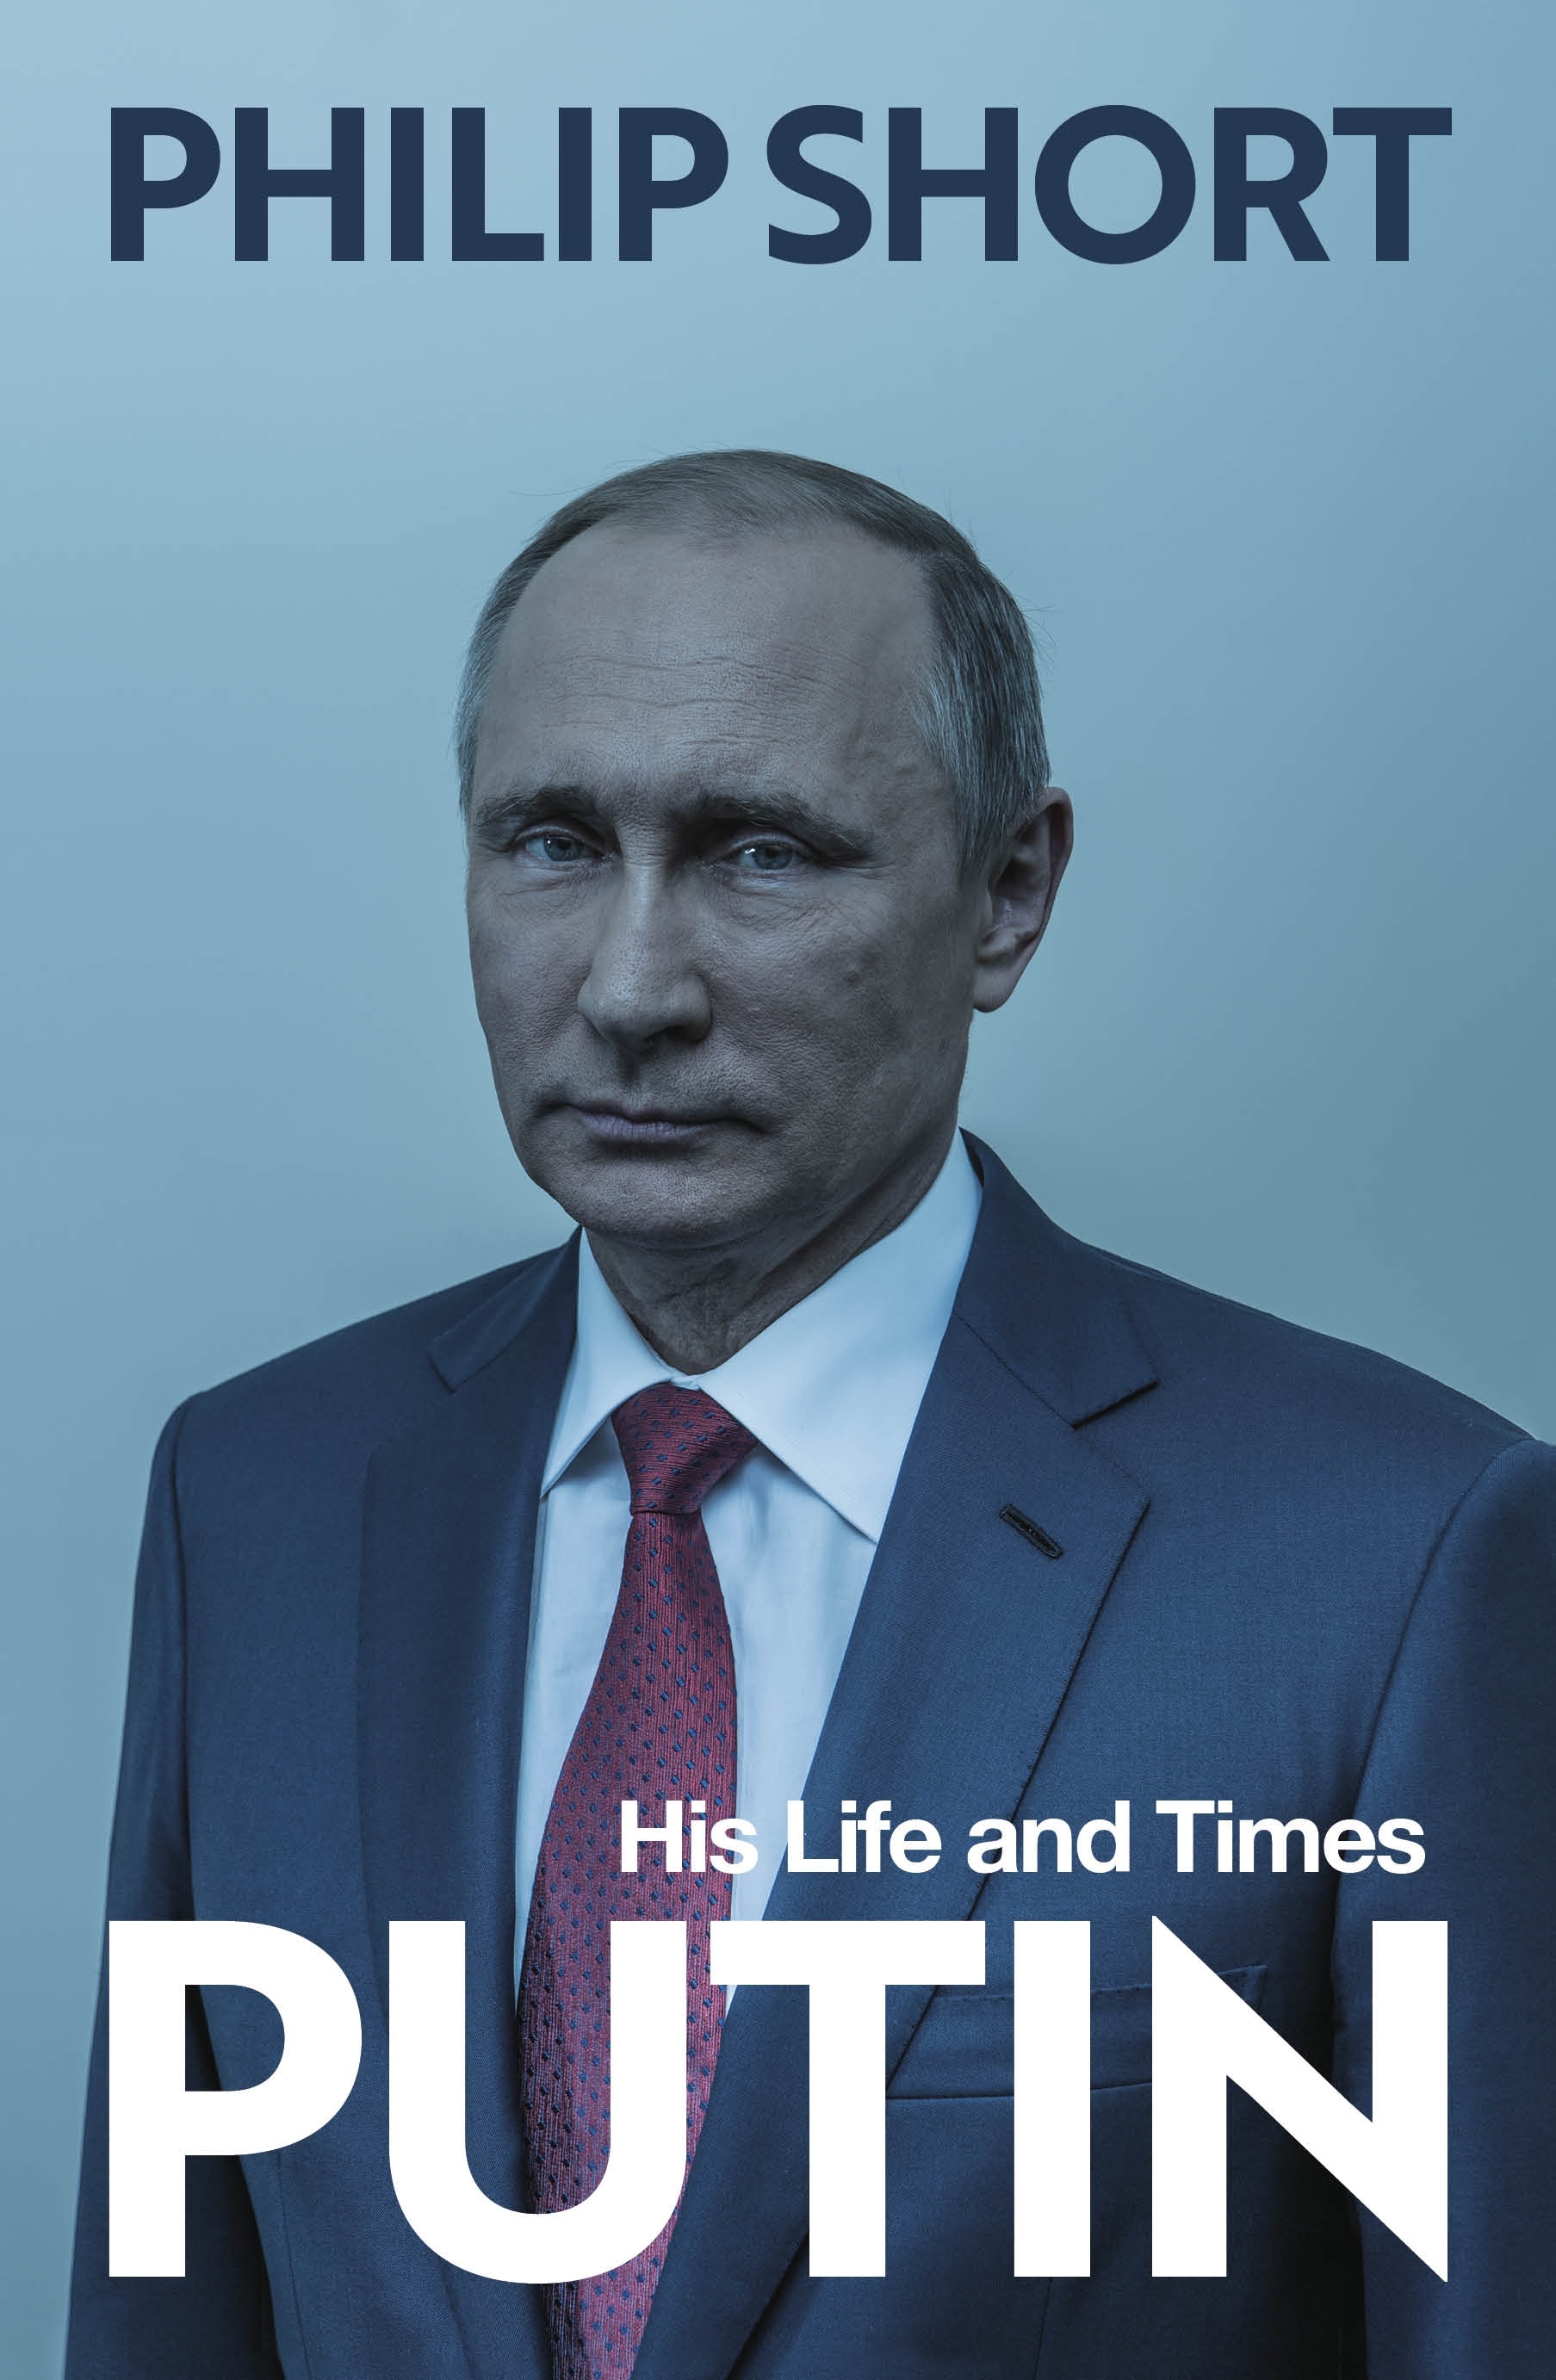 Book “Putin” by Philip Short — June 30, 2022